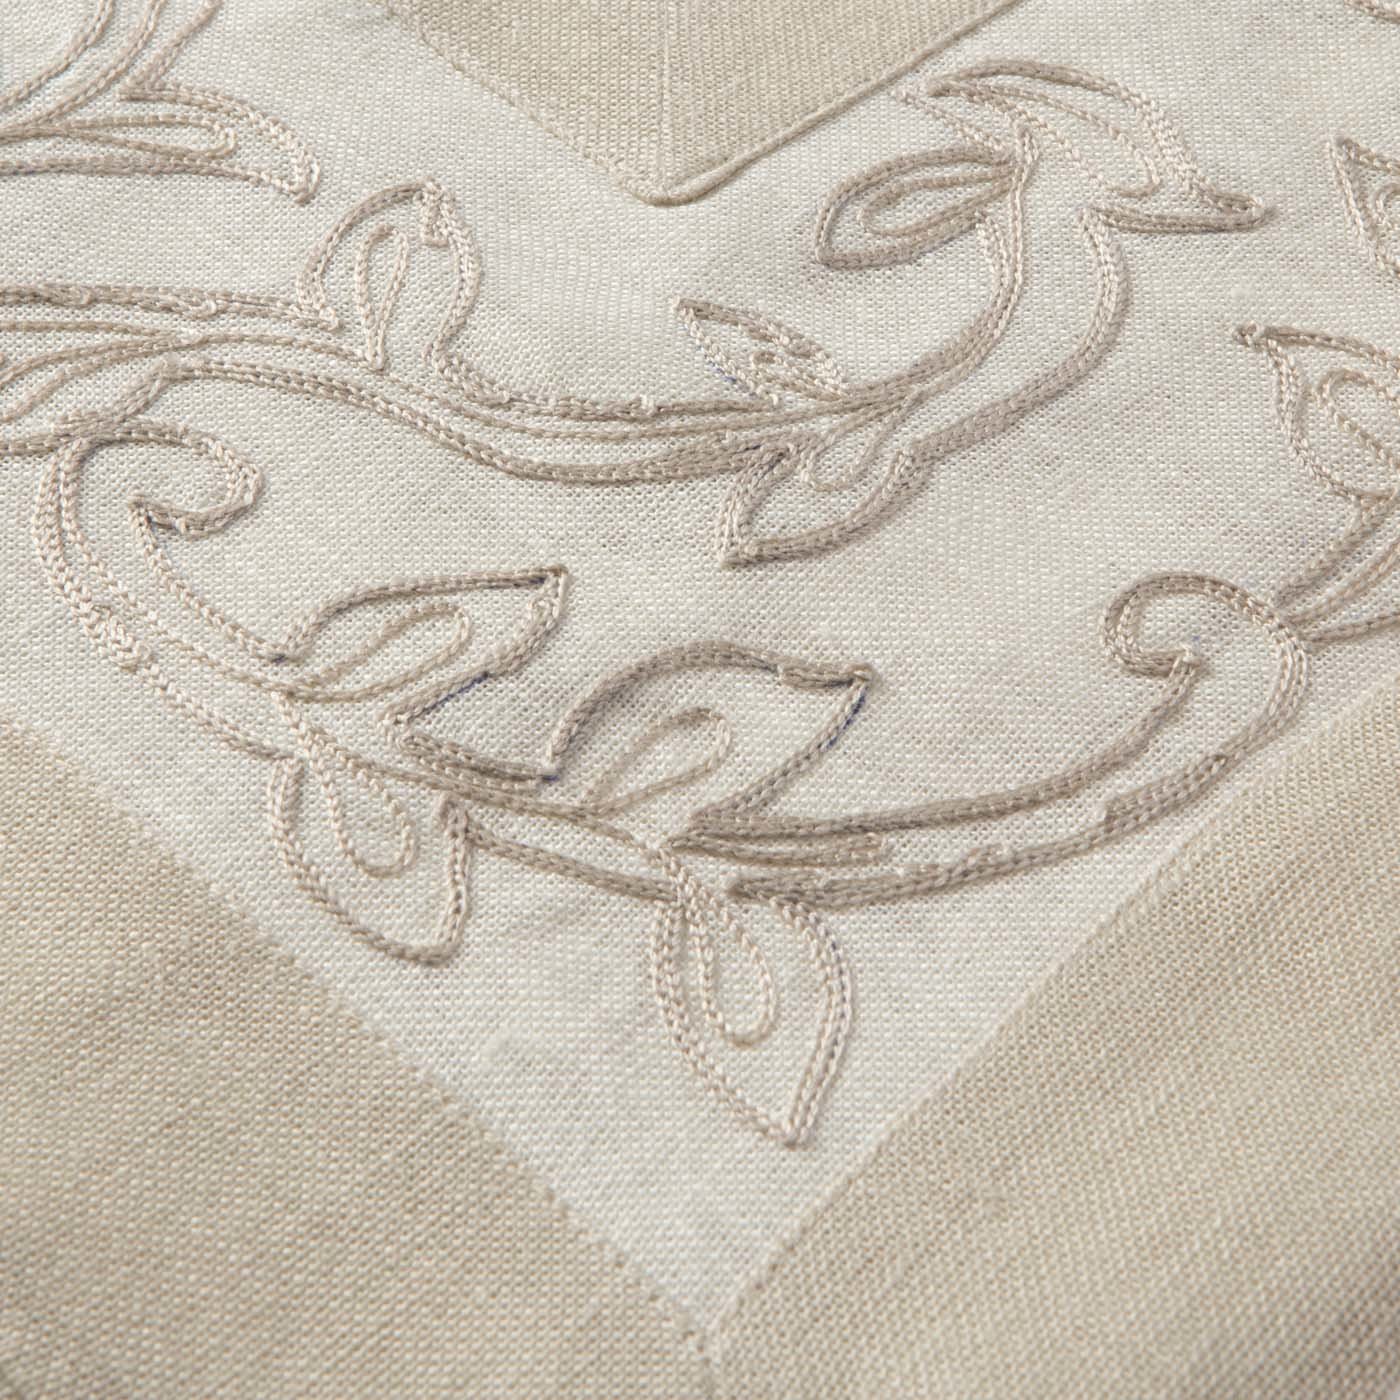 Vasari Linen Tablecloth - Alternative view 2